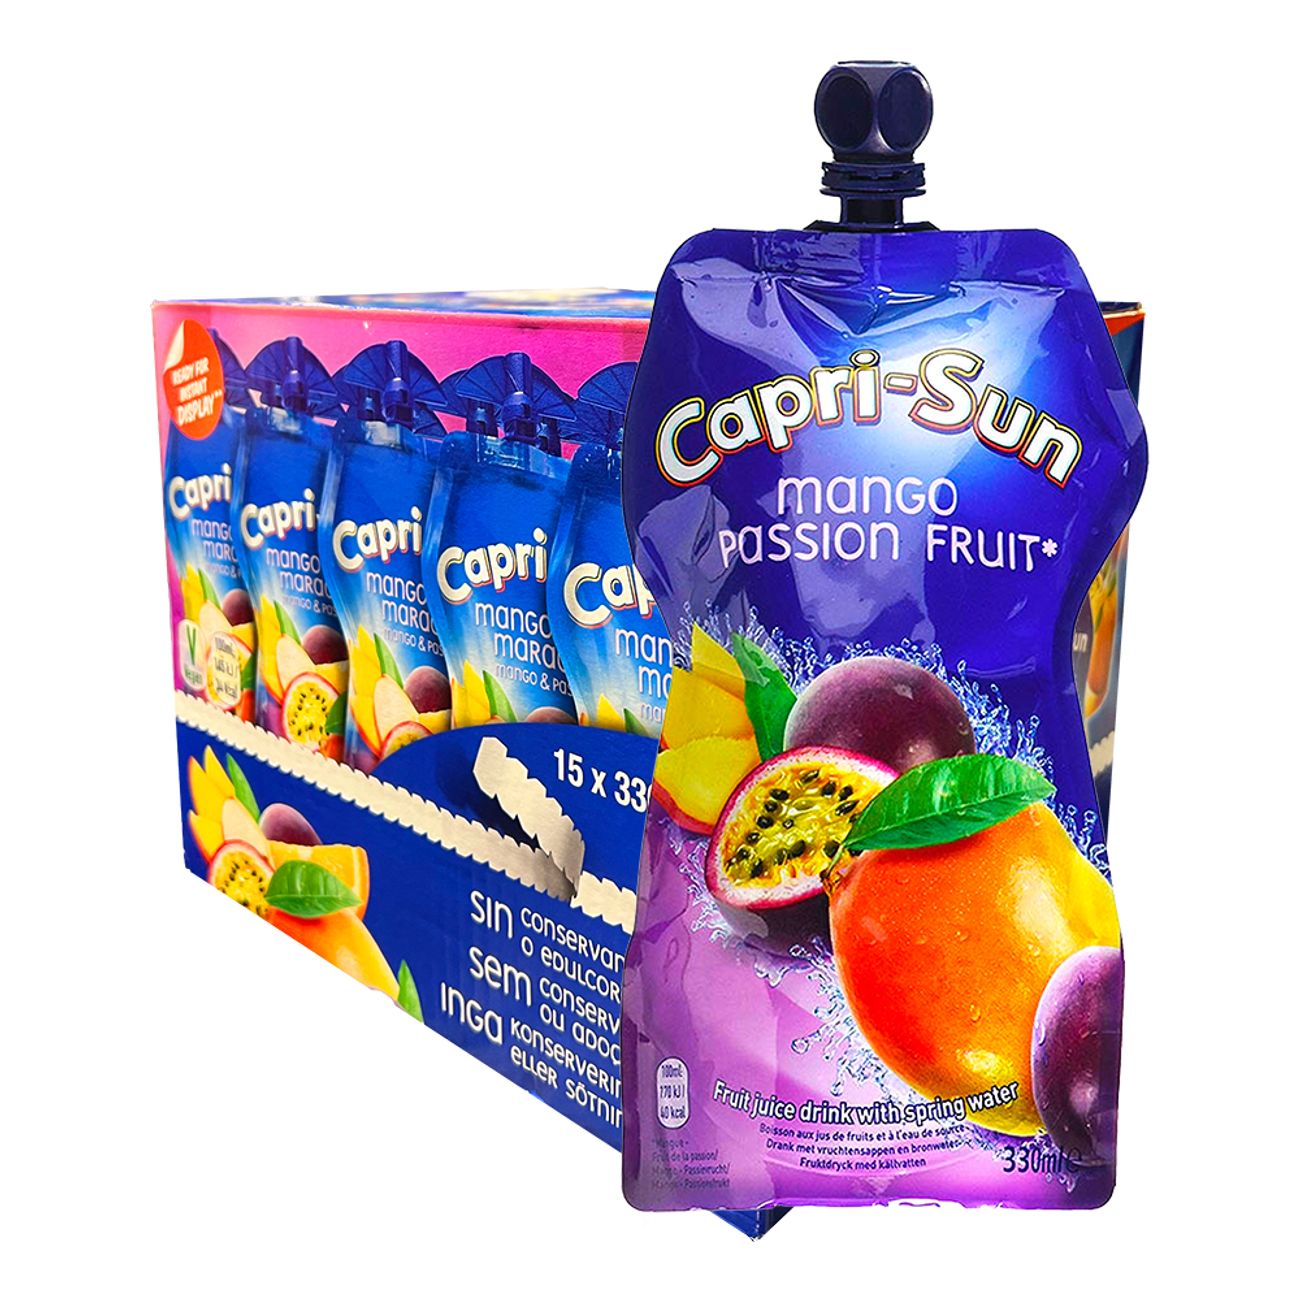 capri-sun-mango-passionsfrukt-storpack-51251-2